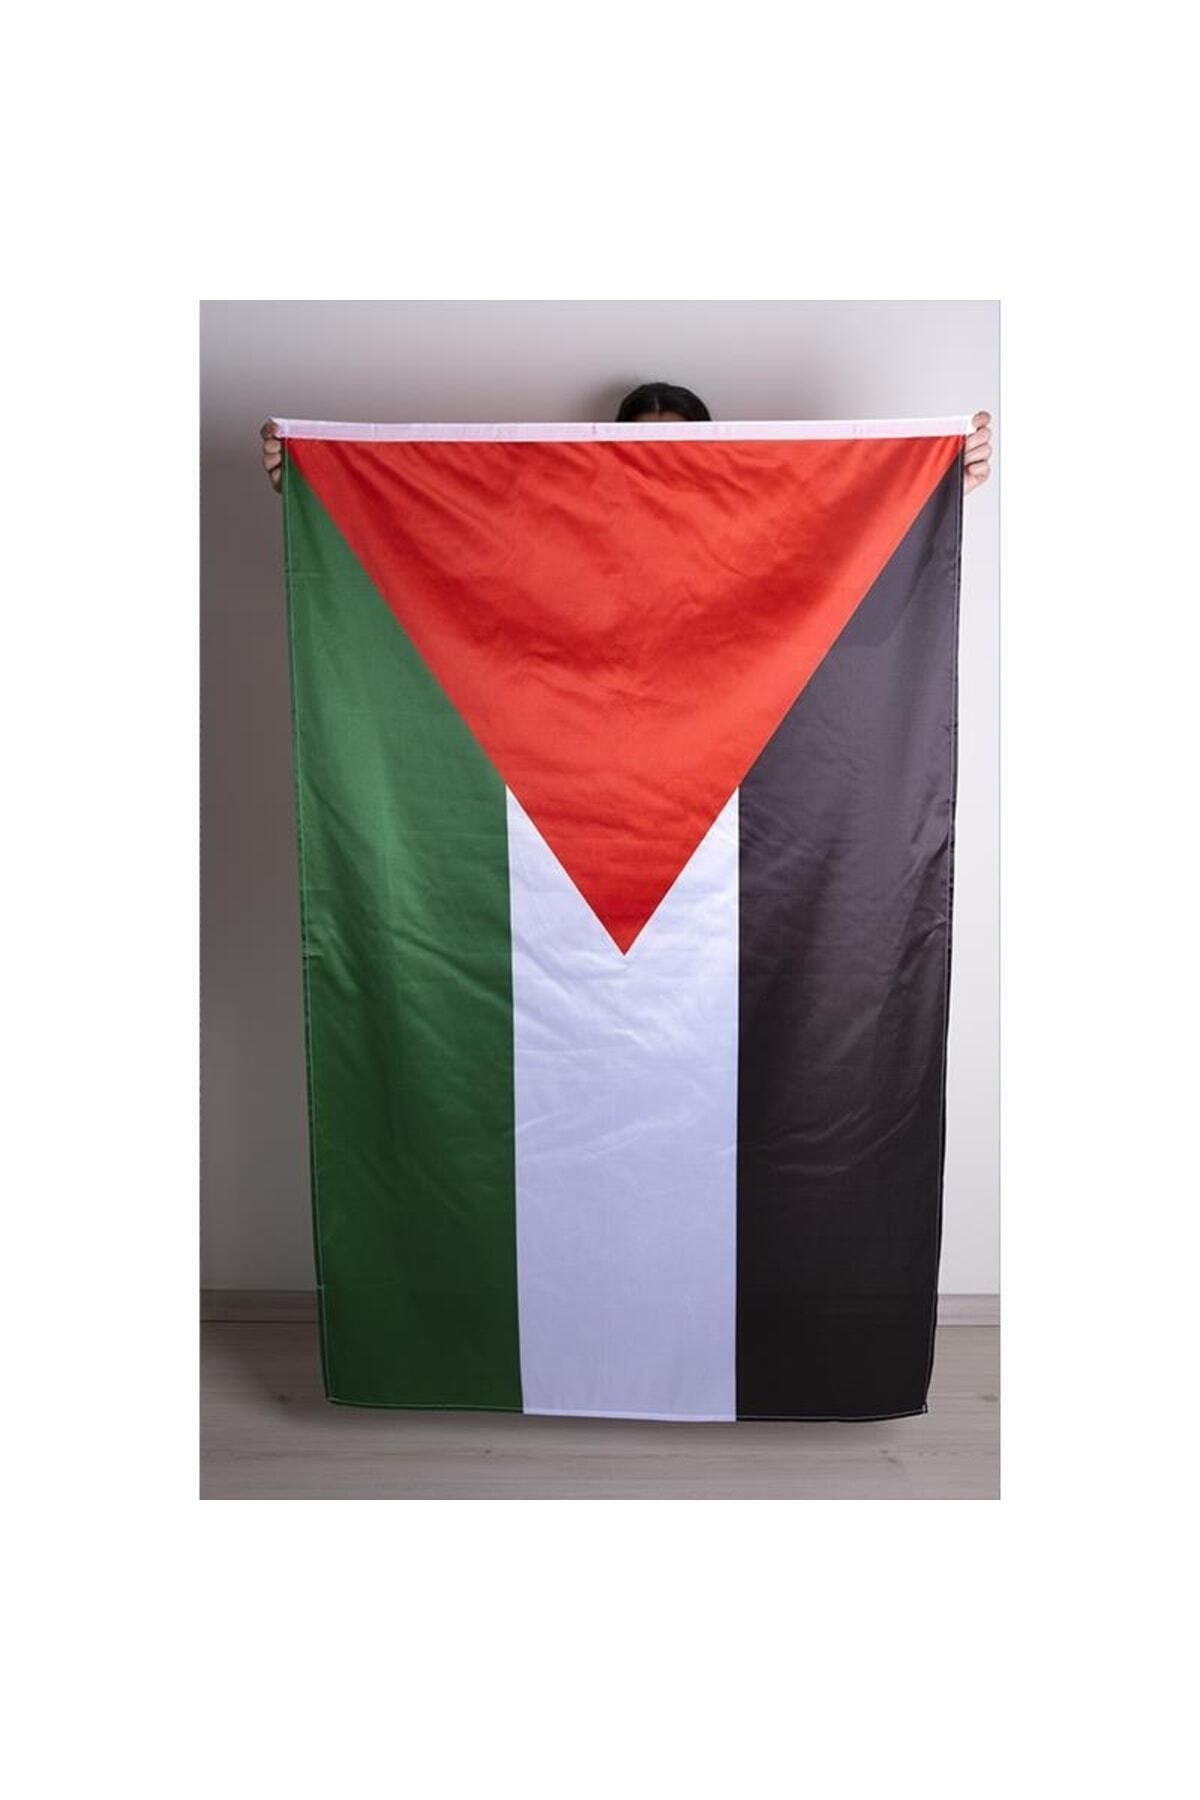 ZC Bayrak 70x105 Filistin Milli Gönder Bayrağı Raşel Kumaş Dijital Baskı